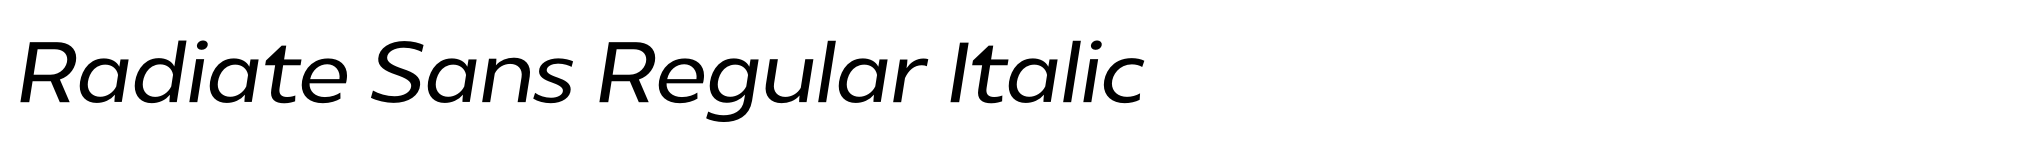 Radiate Sans Regular Italic image